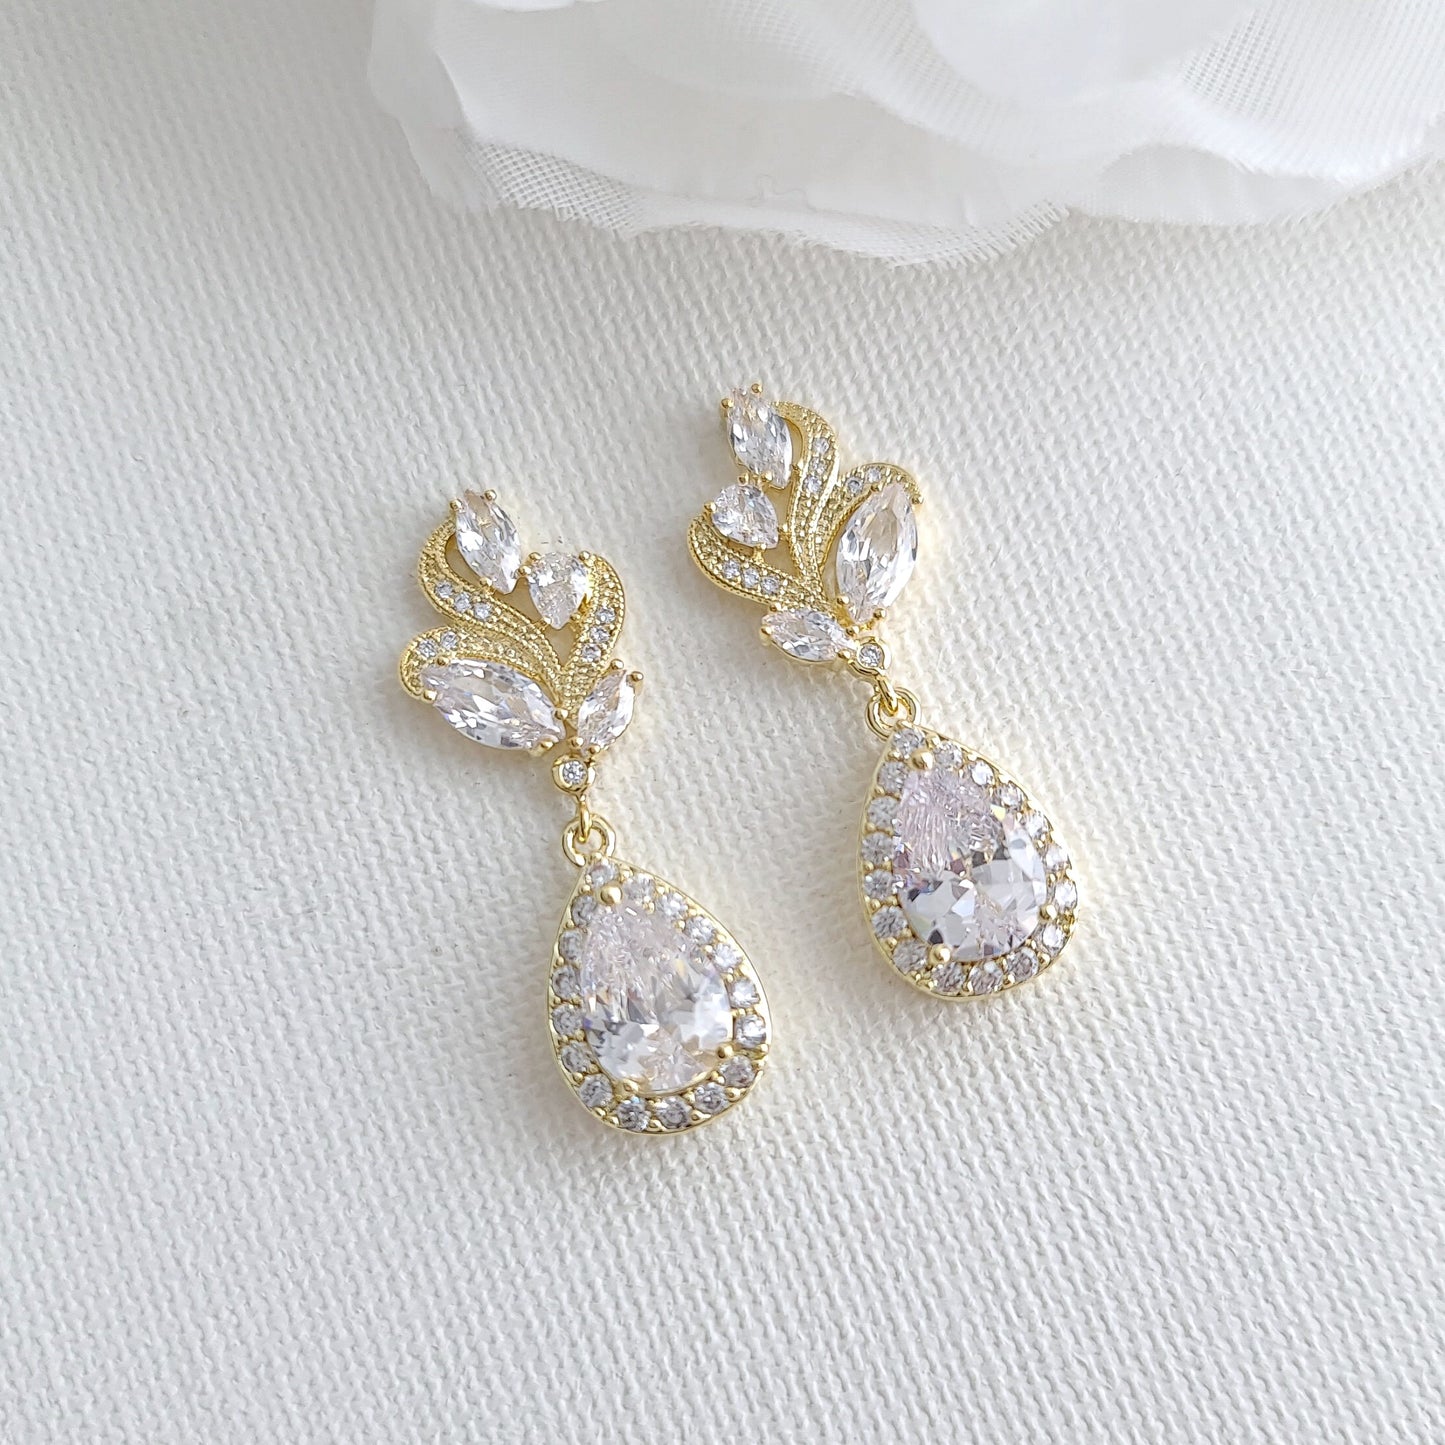 Clear Crystal Drop Earrings for Wedding Silver-Wavy